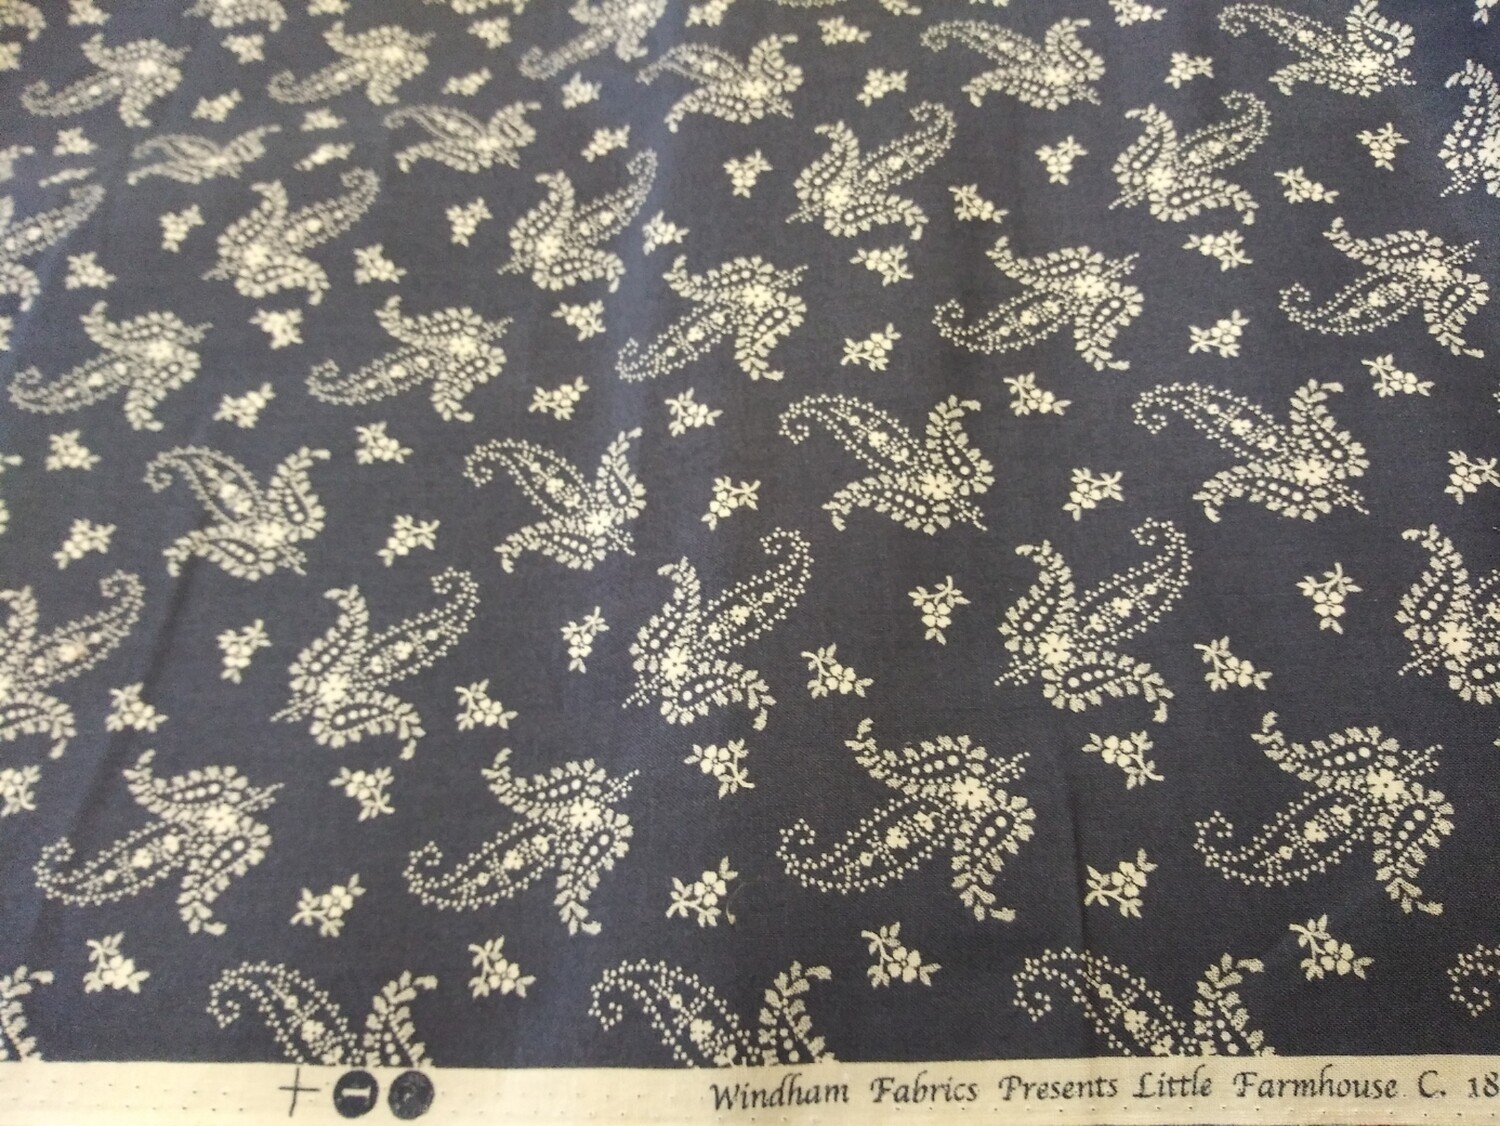 Windham Fabrics-Little Farmhouse C. 1870 by LB Krueger